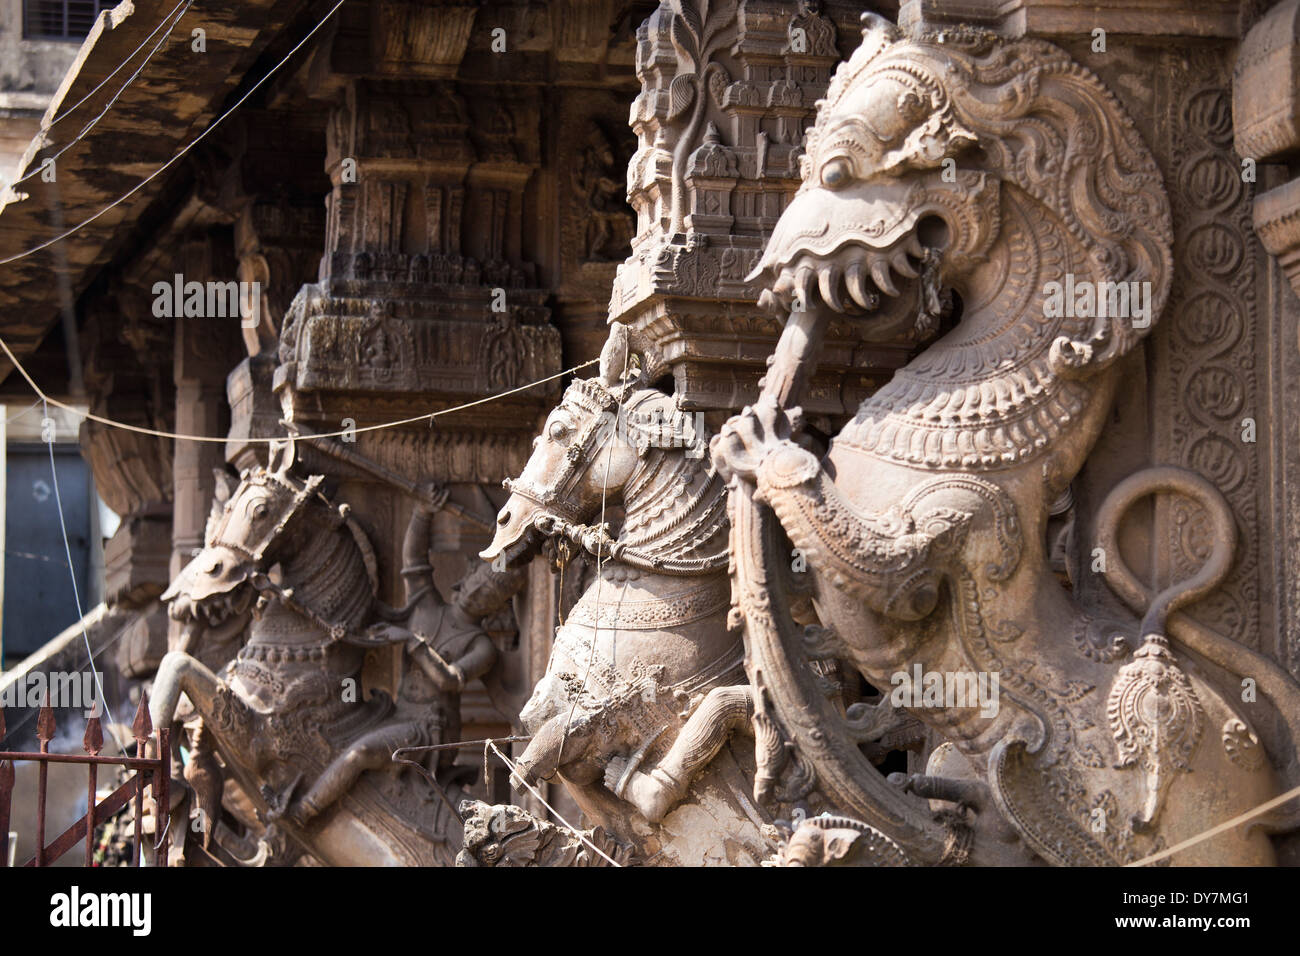 Hindu sculptures outside the Meenakshi Amman Temple, Madurai, India Stock Photo